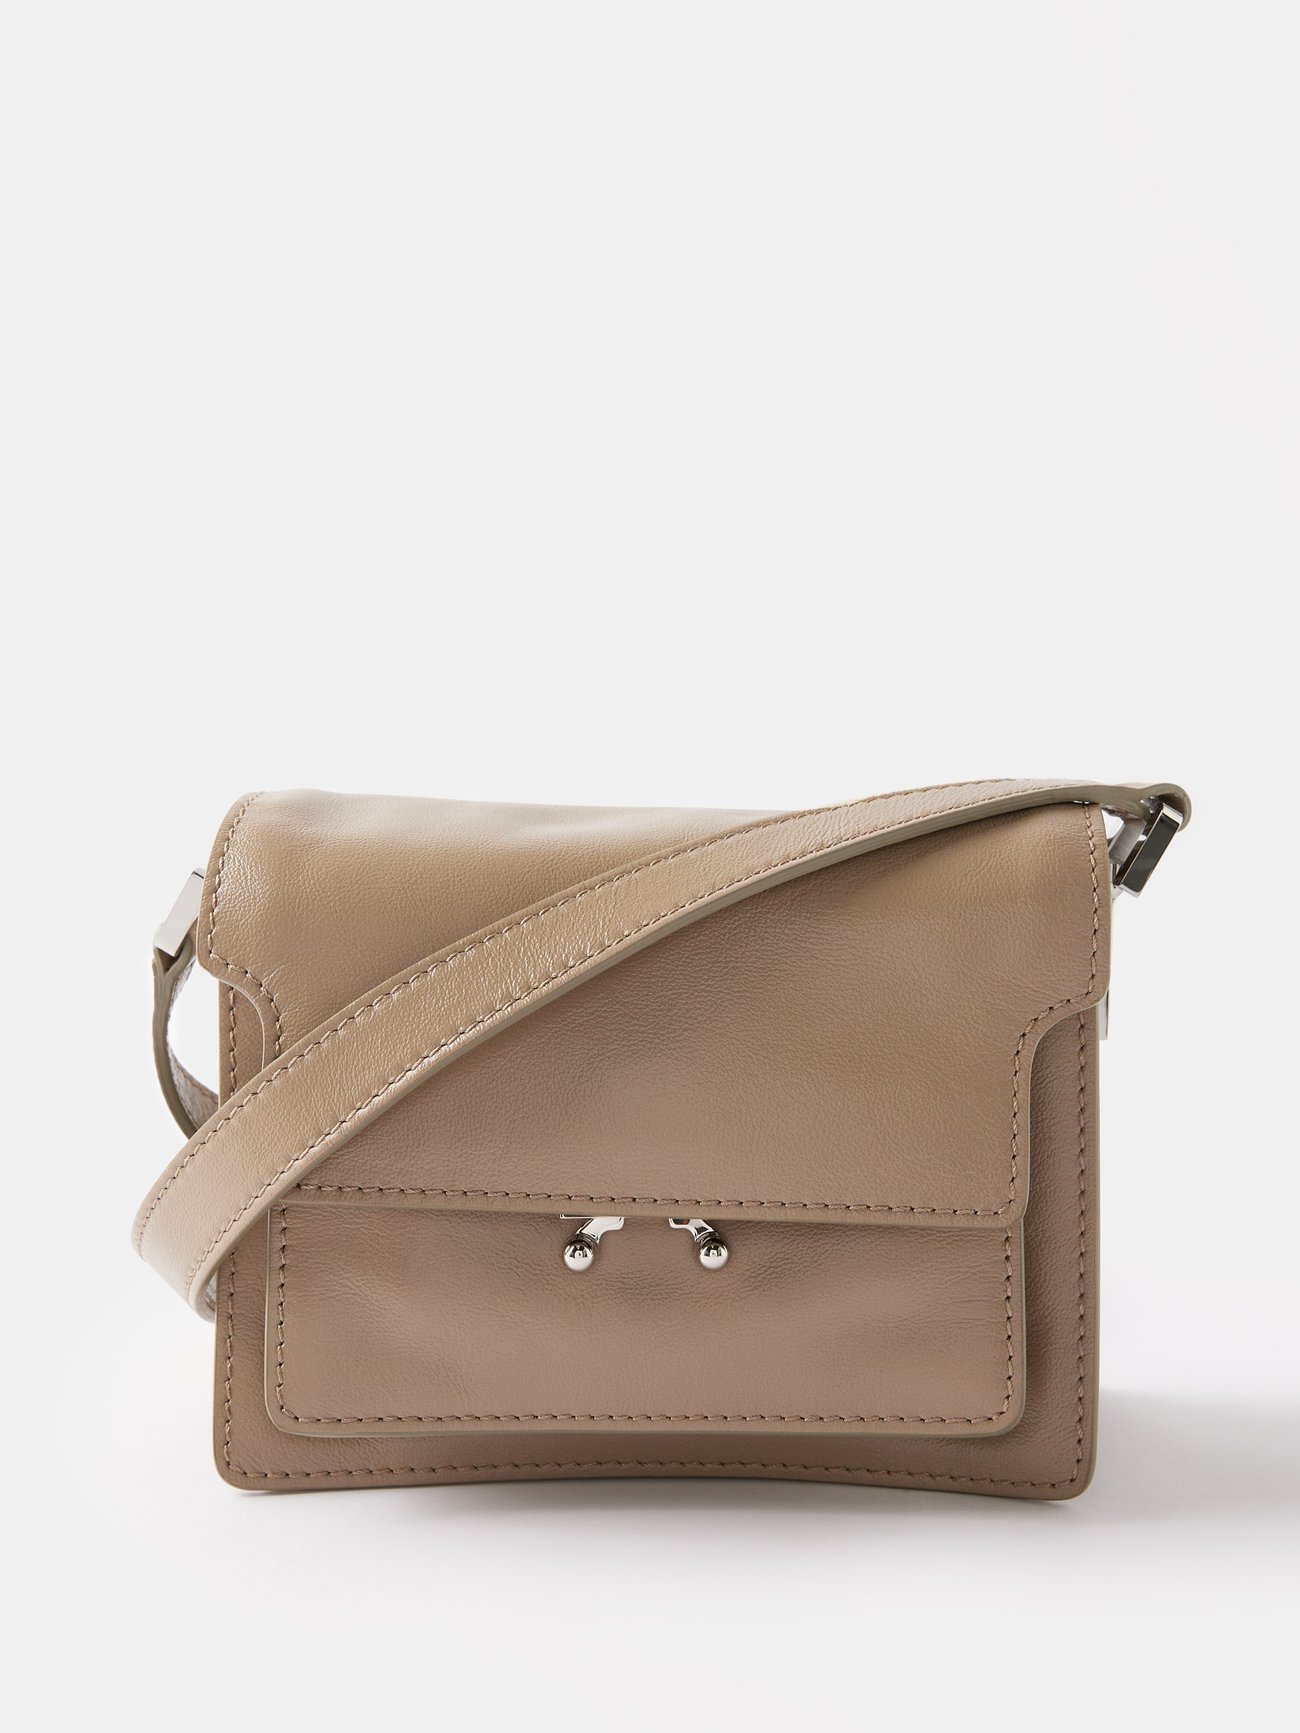 Marni Trunk mini leather cross-body bag @ MATCHESFASHION.COM $1485